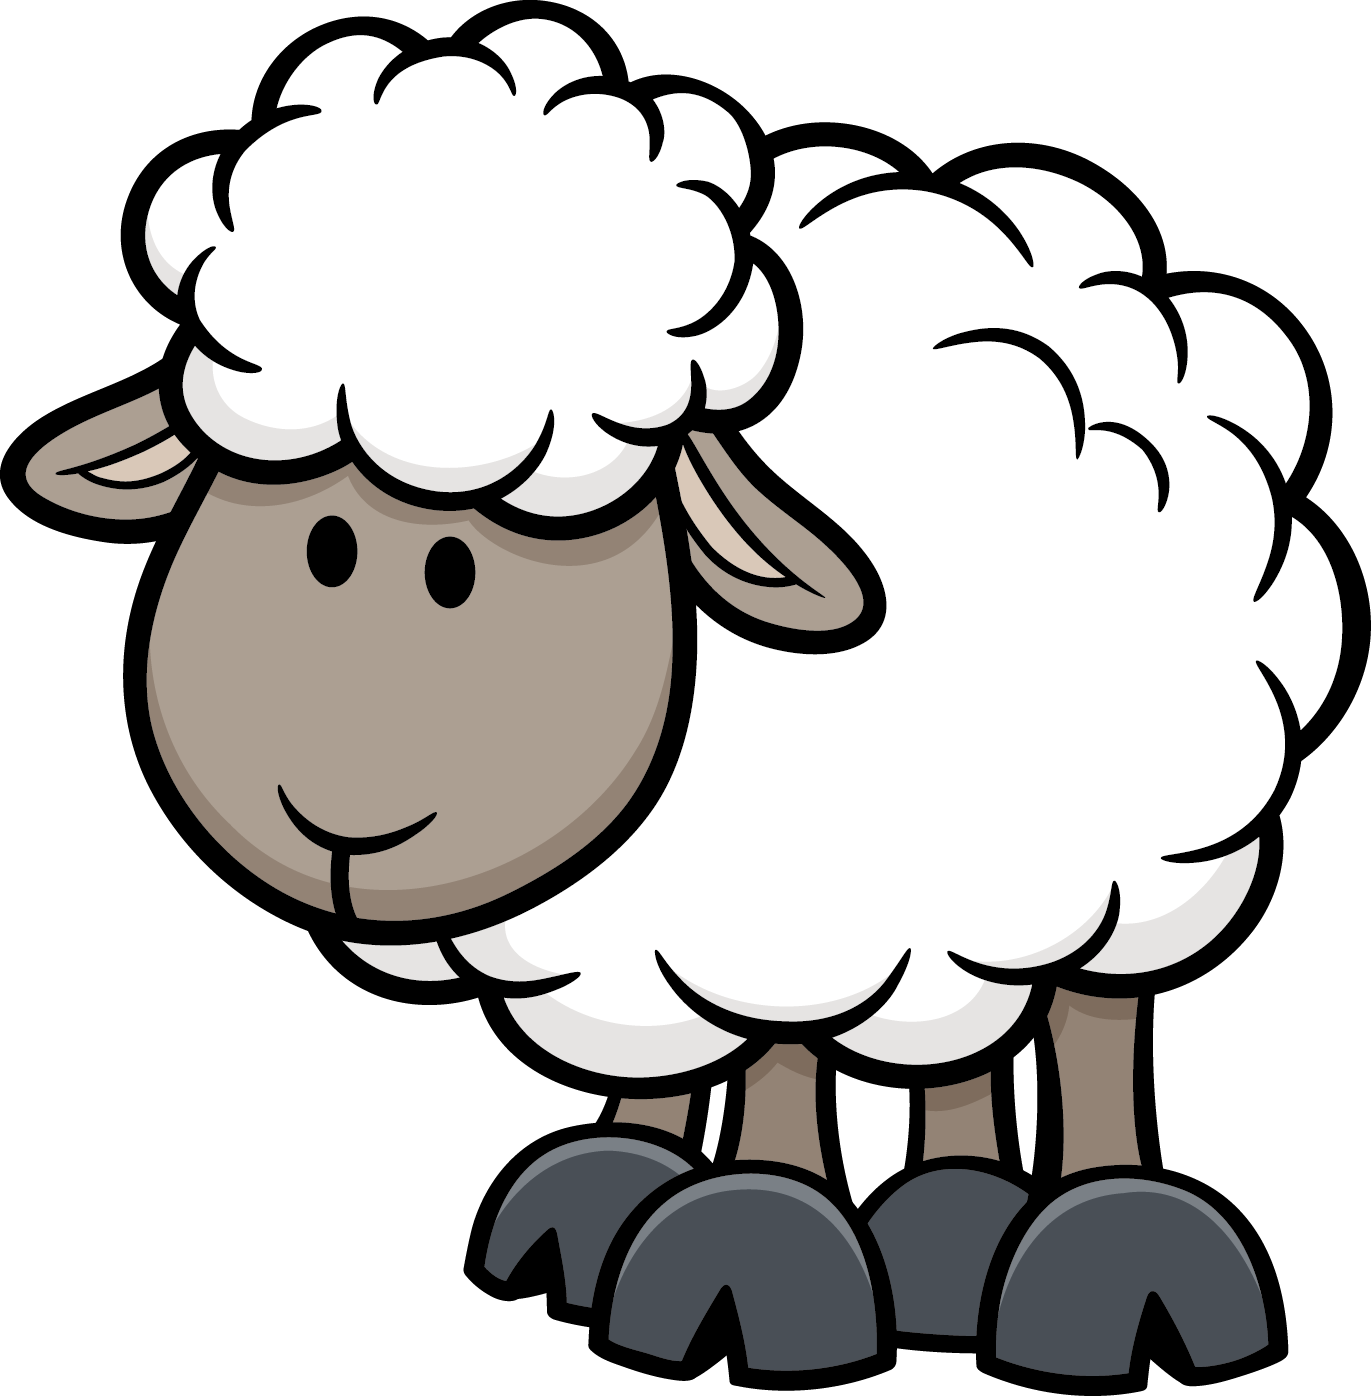 Sheep Animals Cartoon Illustration Download HQ PNG Clipart